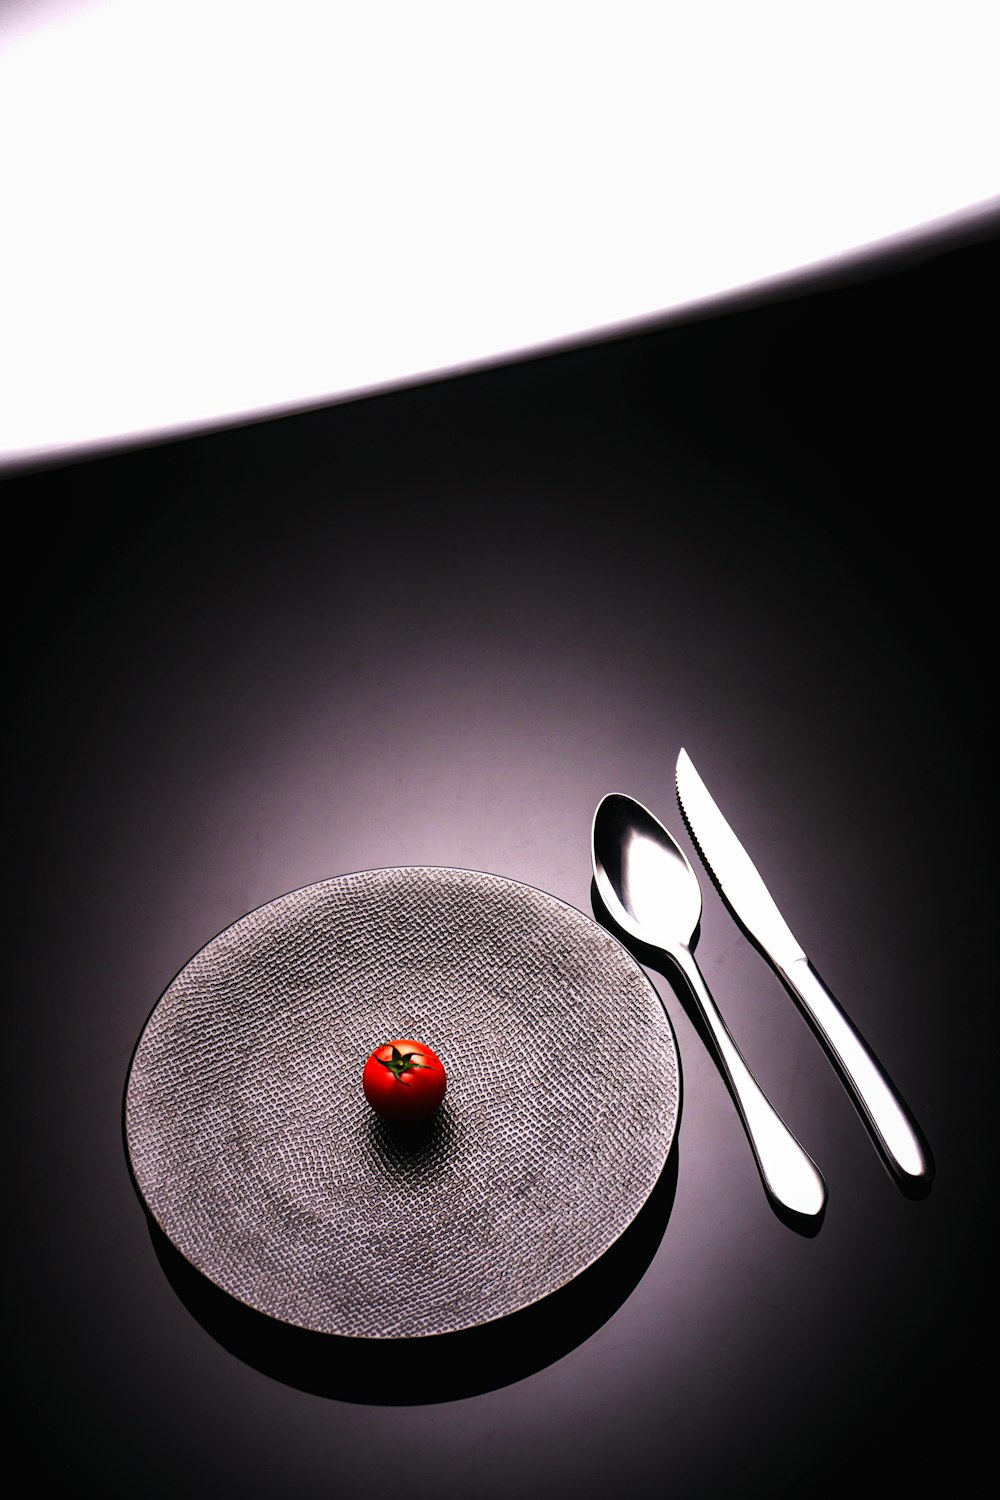 un plato con un tenedor, un cuchillo y un tomate